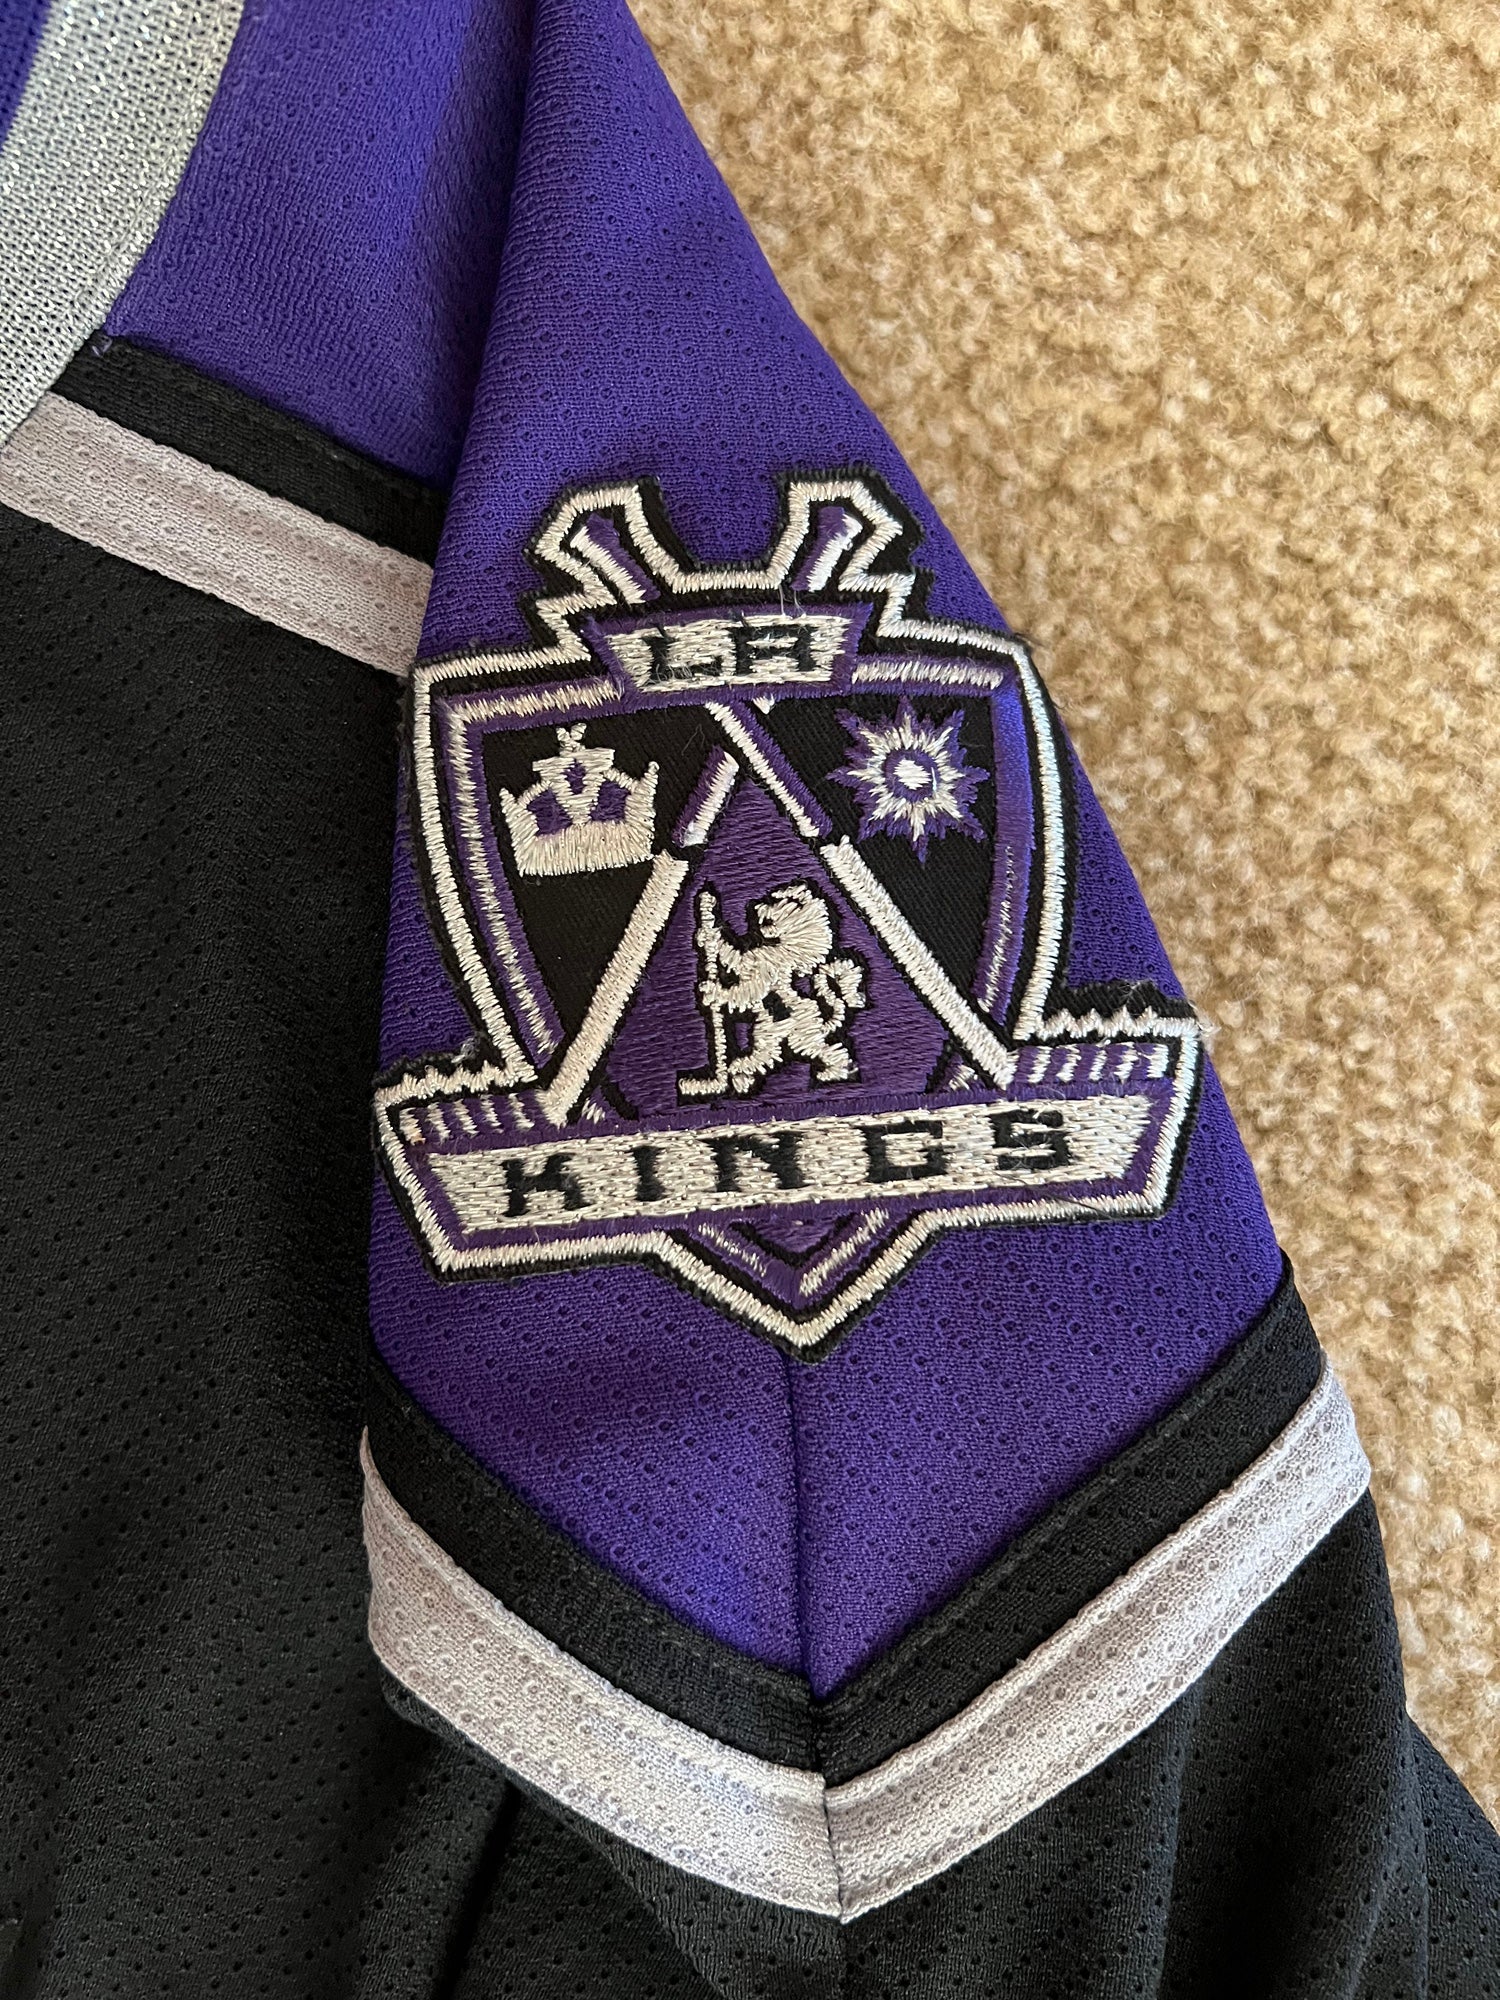 LA Kings Purple Silver and Black Crown Jersey CCM Size Large